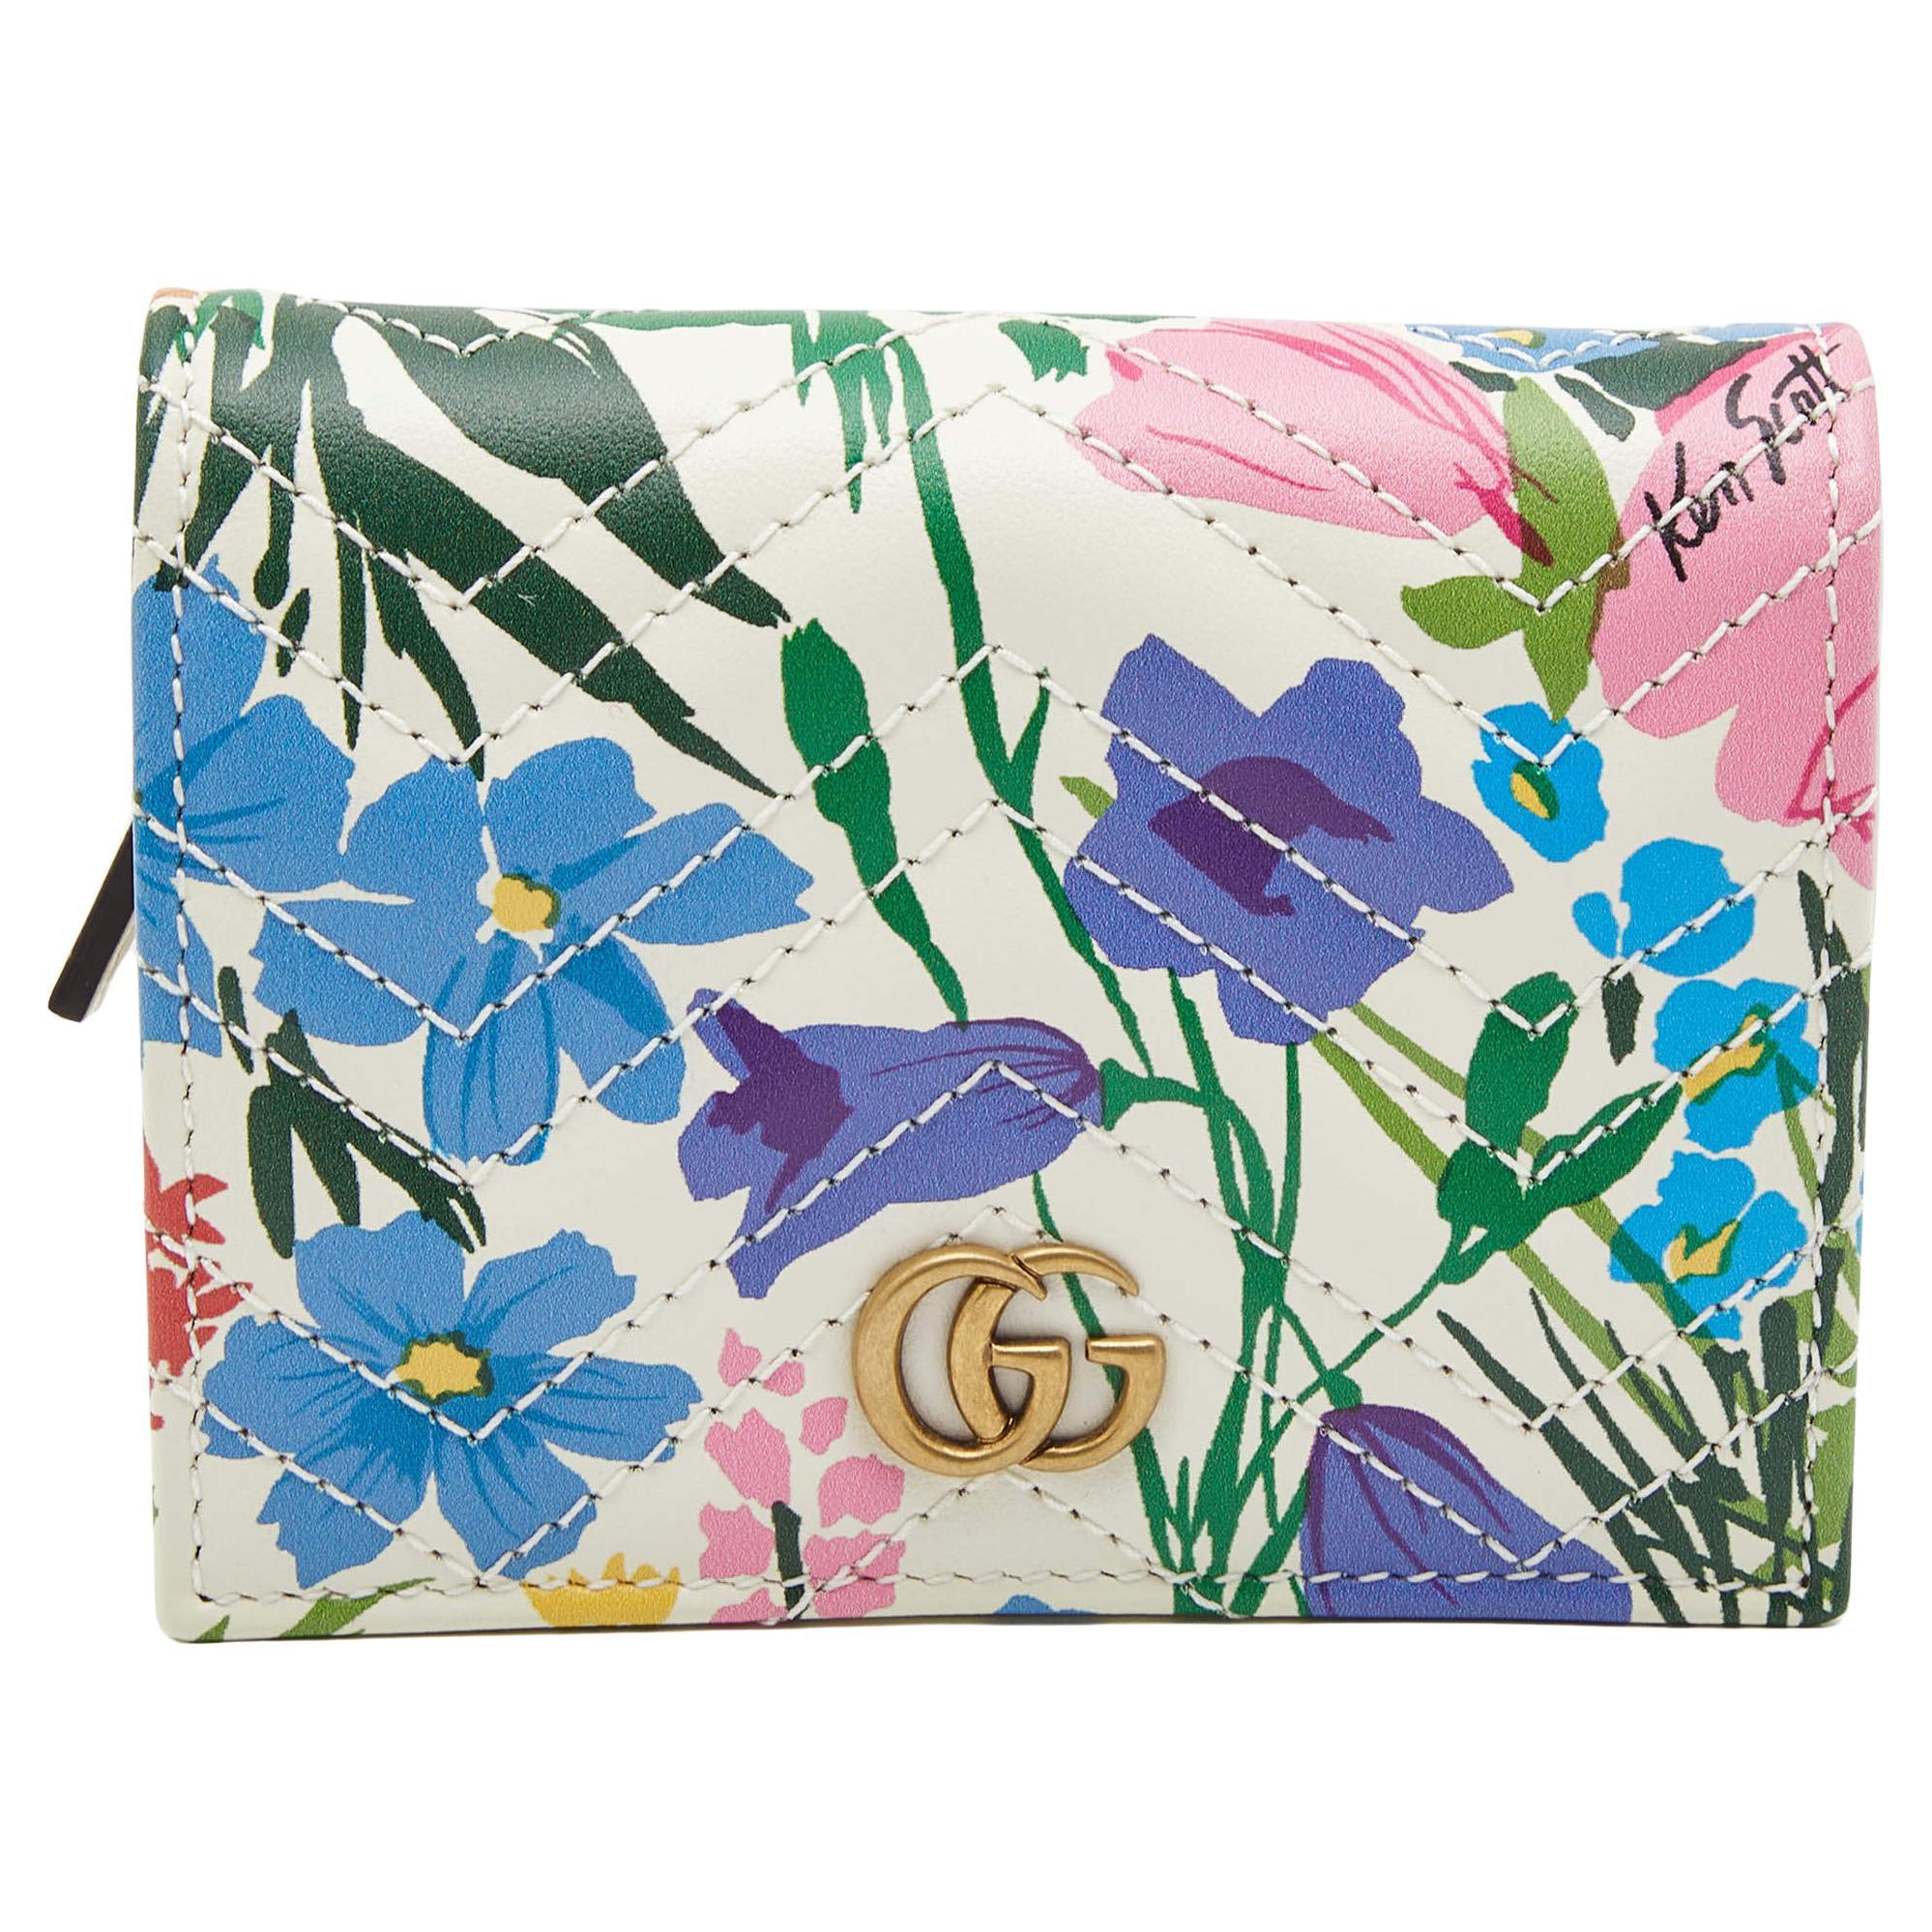 Gucci x Ken Scott Multicolor Floral Print Leather GG Marmont Card Case For Sale